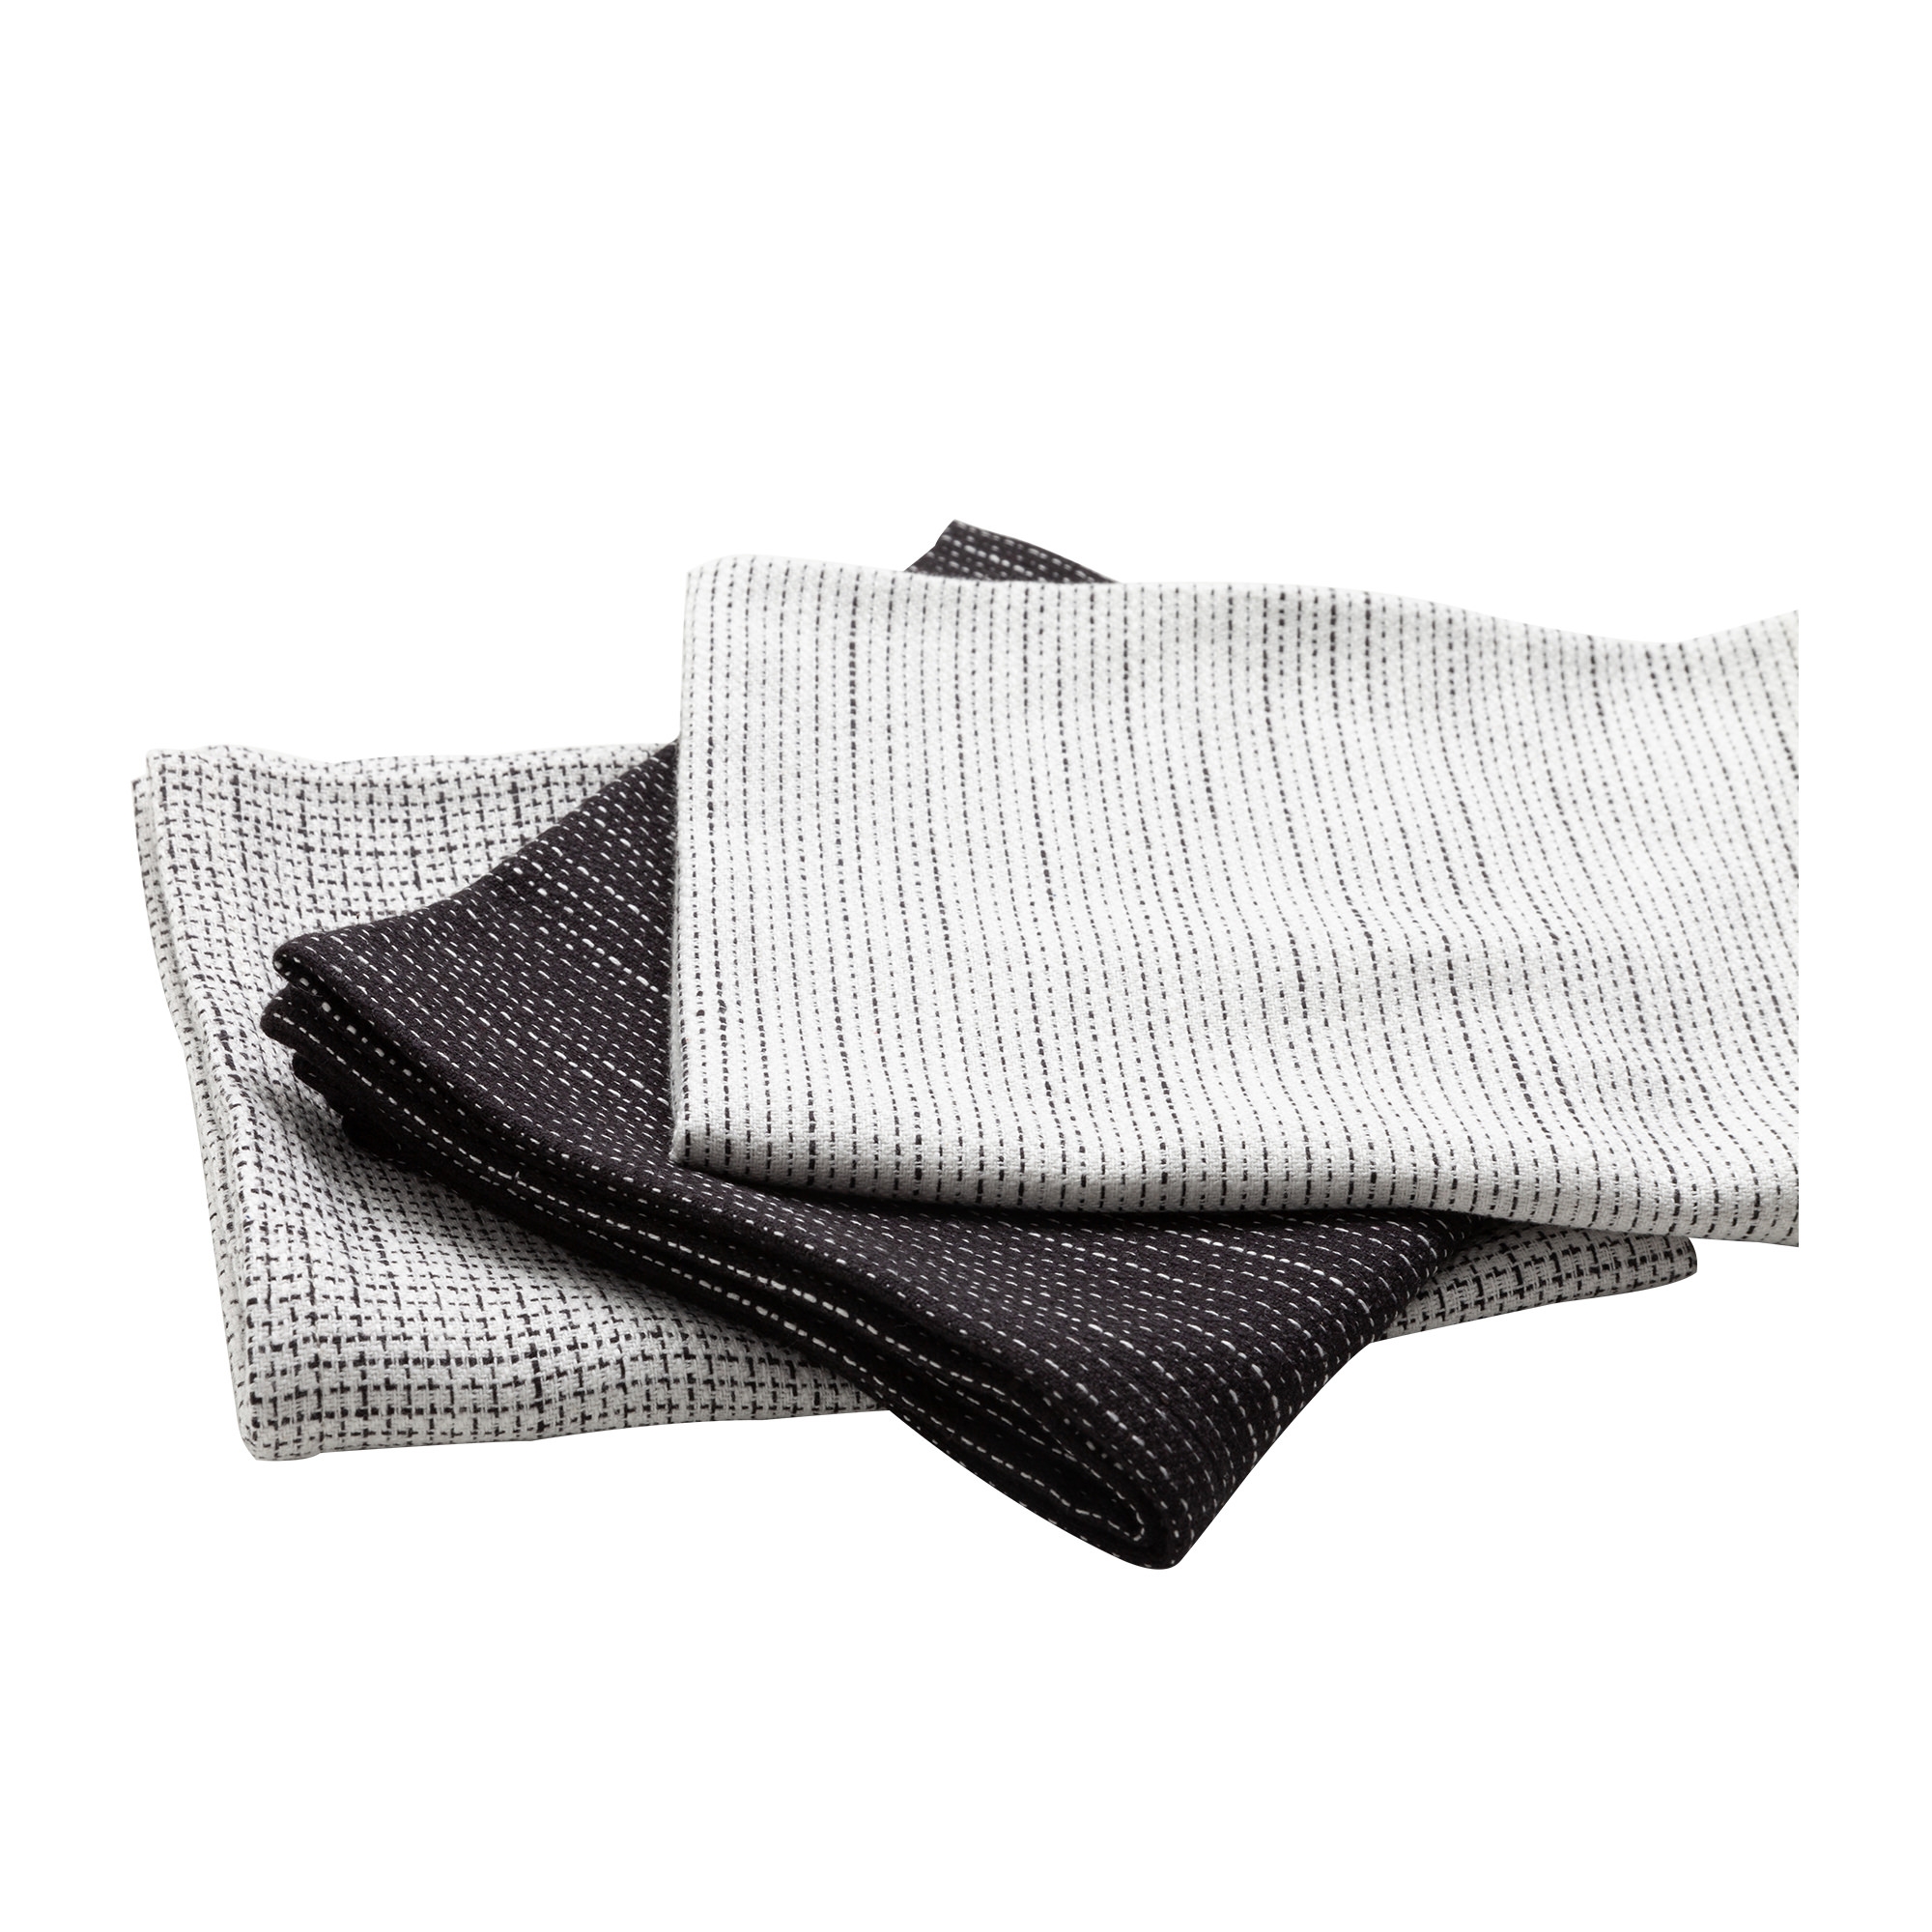 Salisbury & Co Devon Tea Towel Set of 3 Black and White Image 2